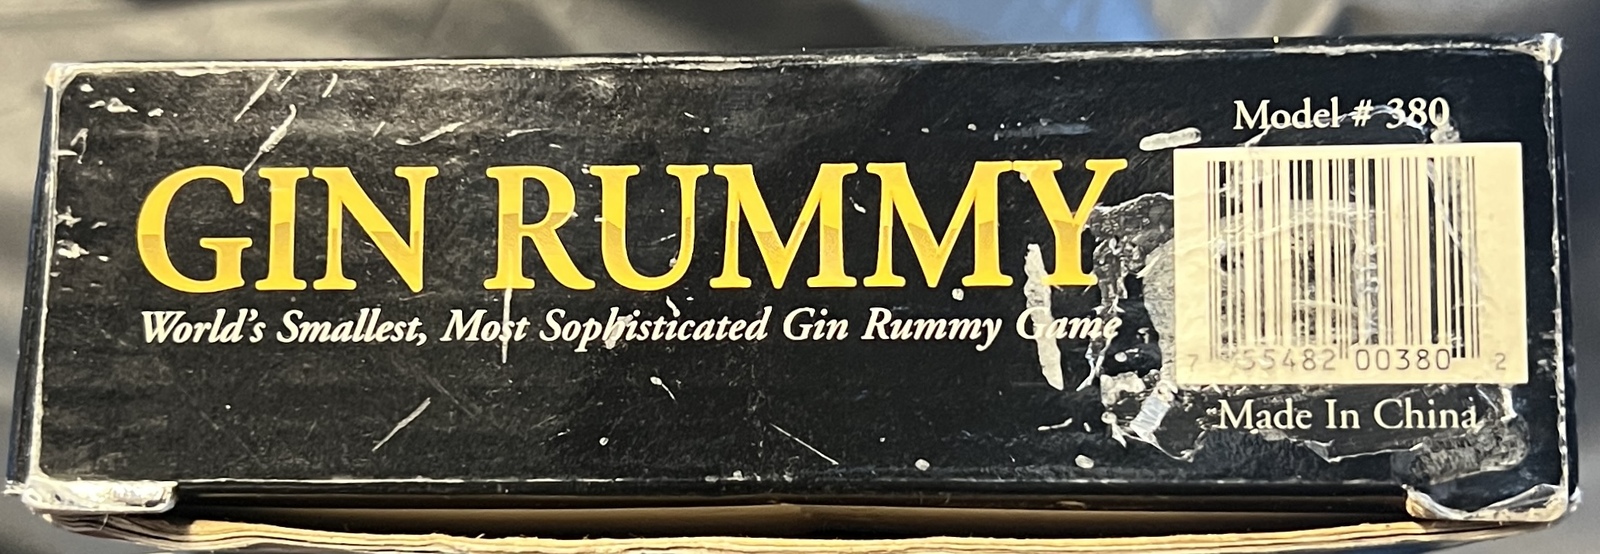 Talking Gin Rummy Excalibur Electronics Handheld Electronic Card Game Model 380 